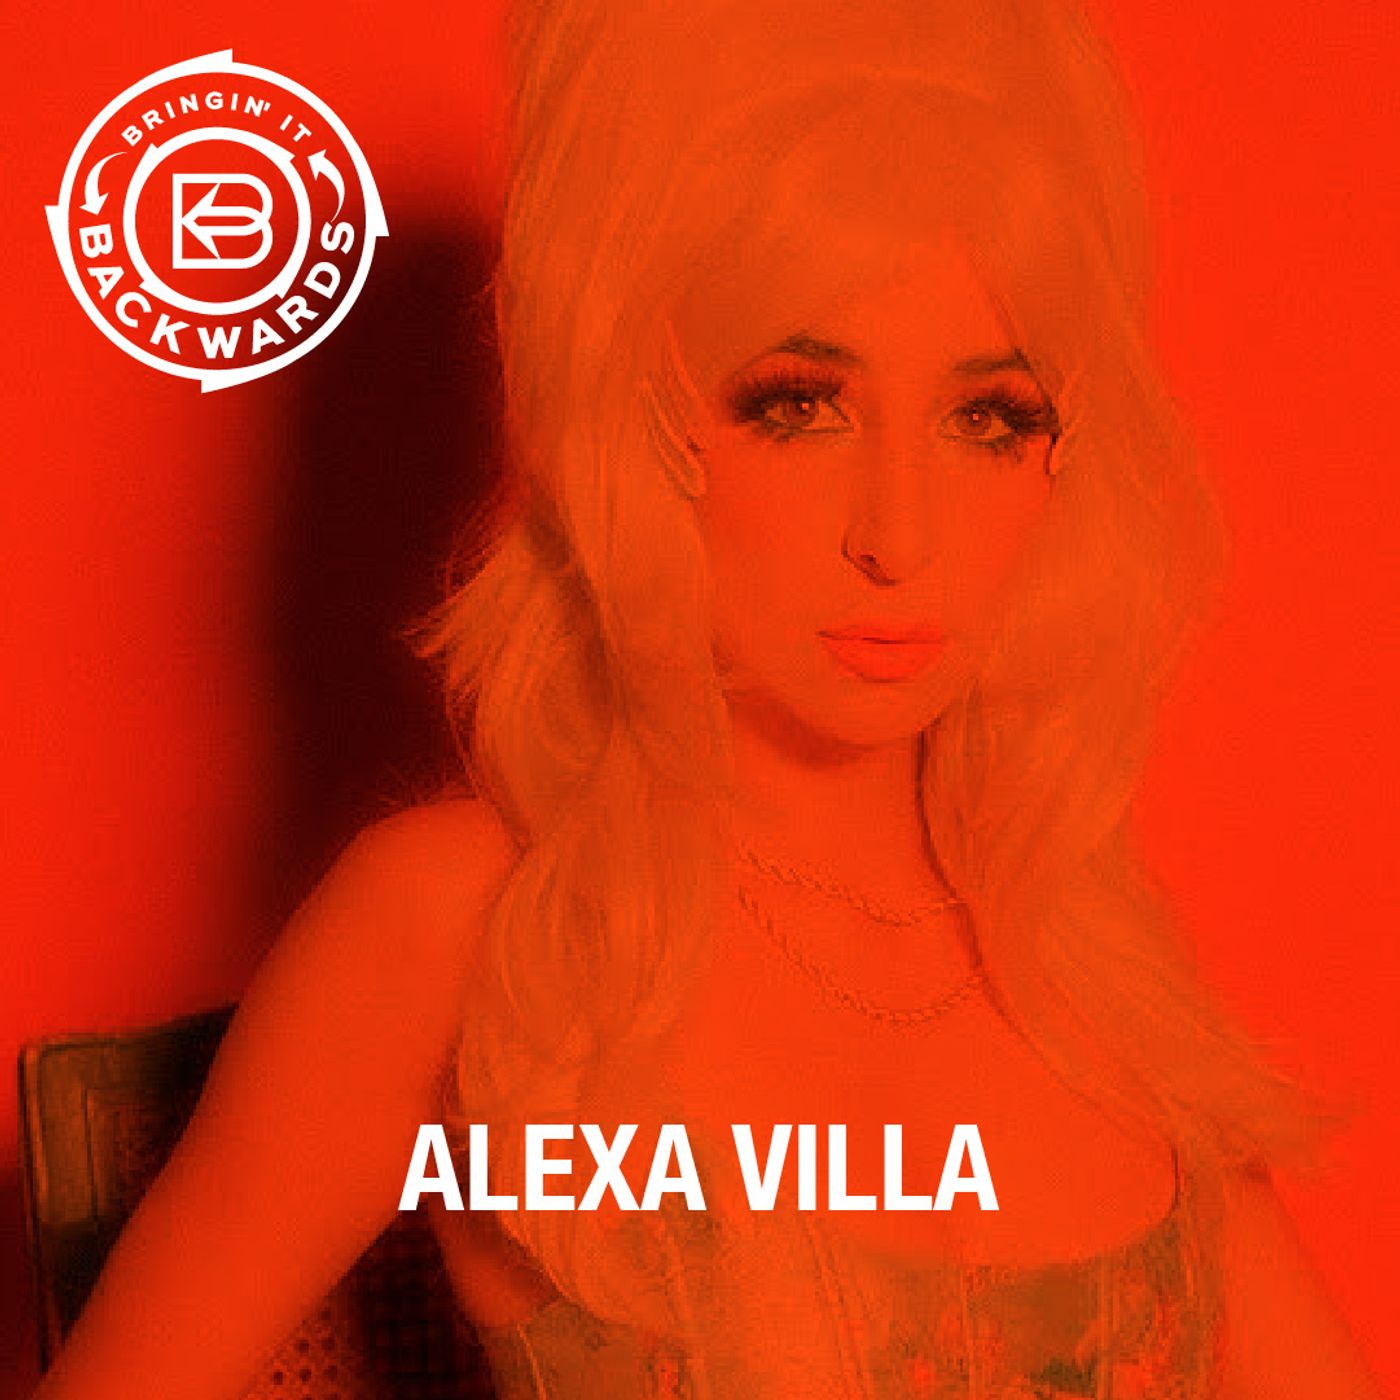 Interview with Alexa Villa Image